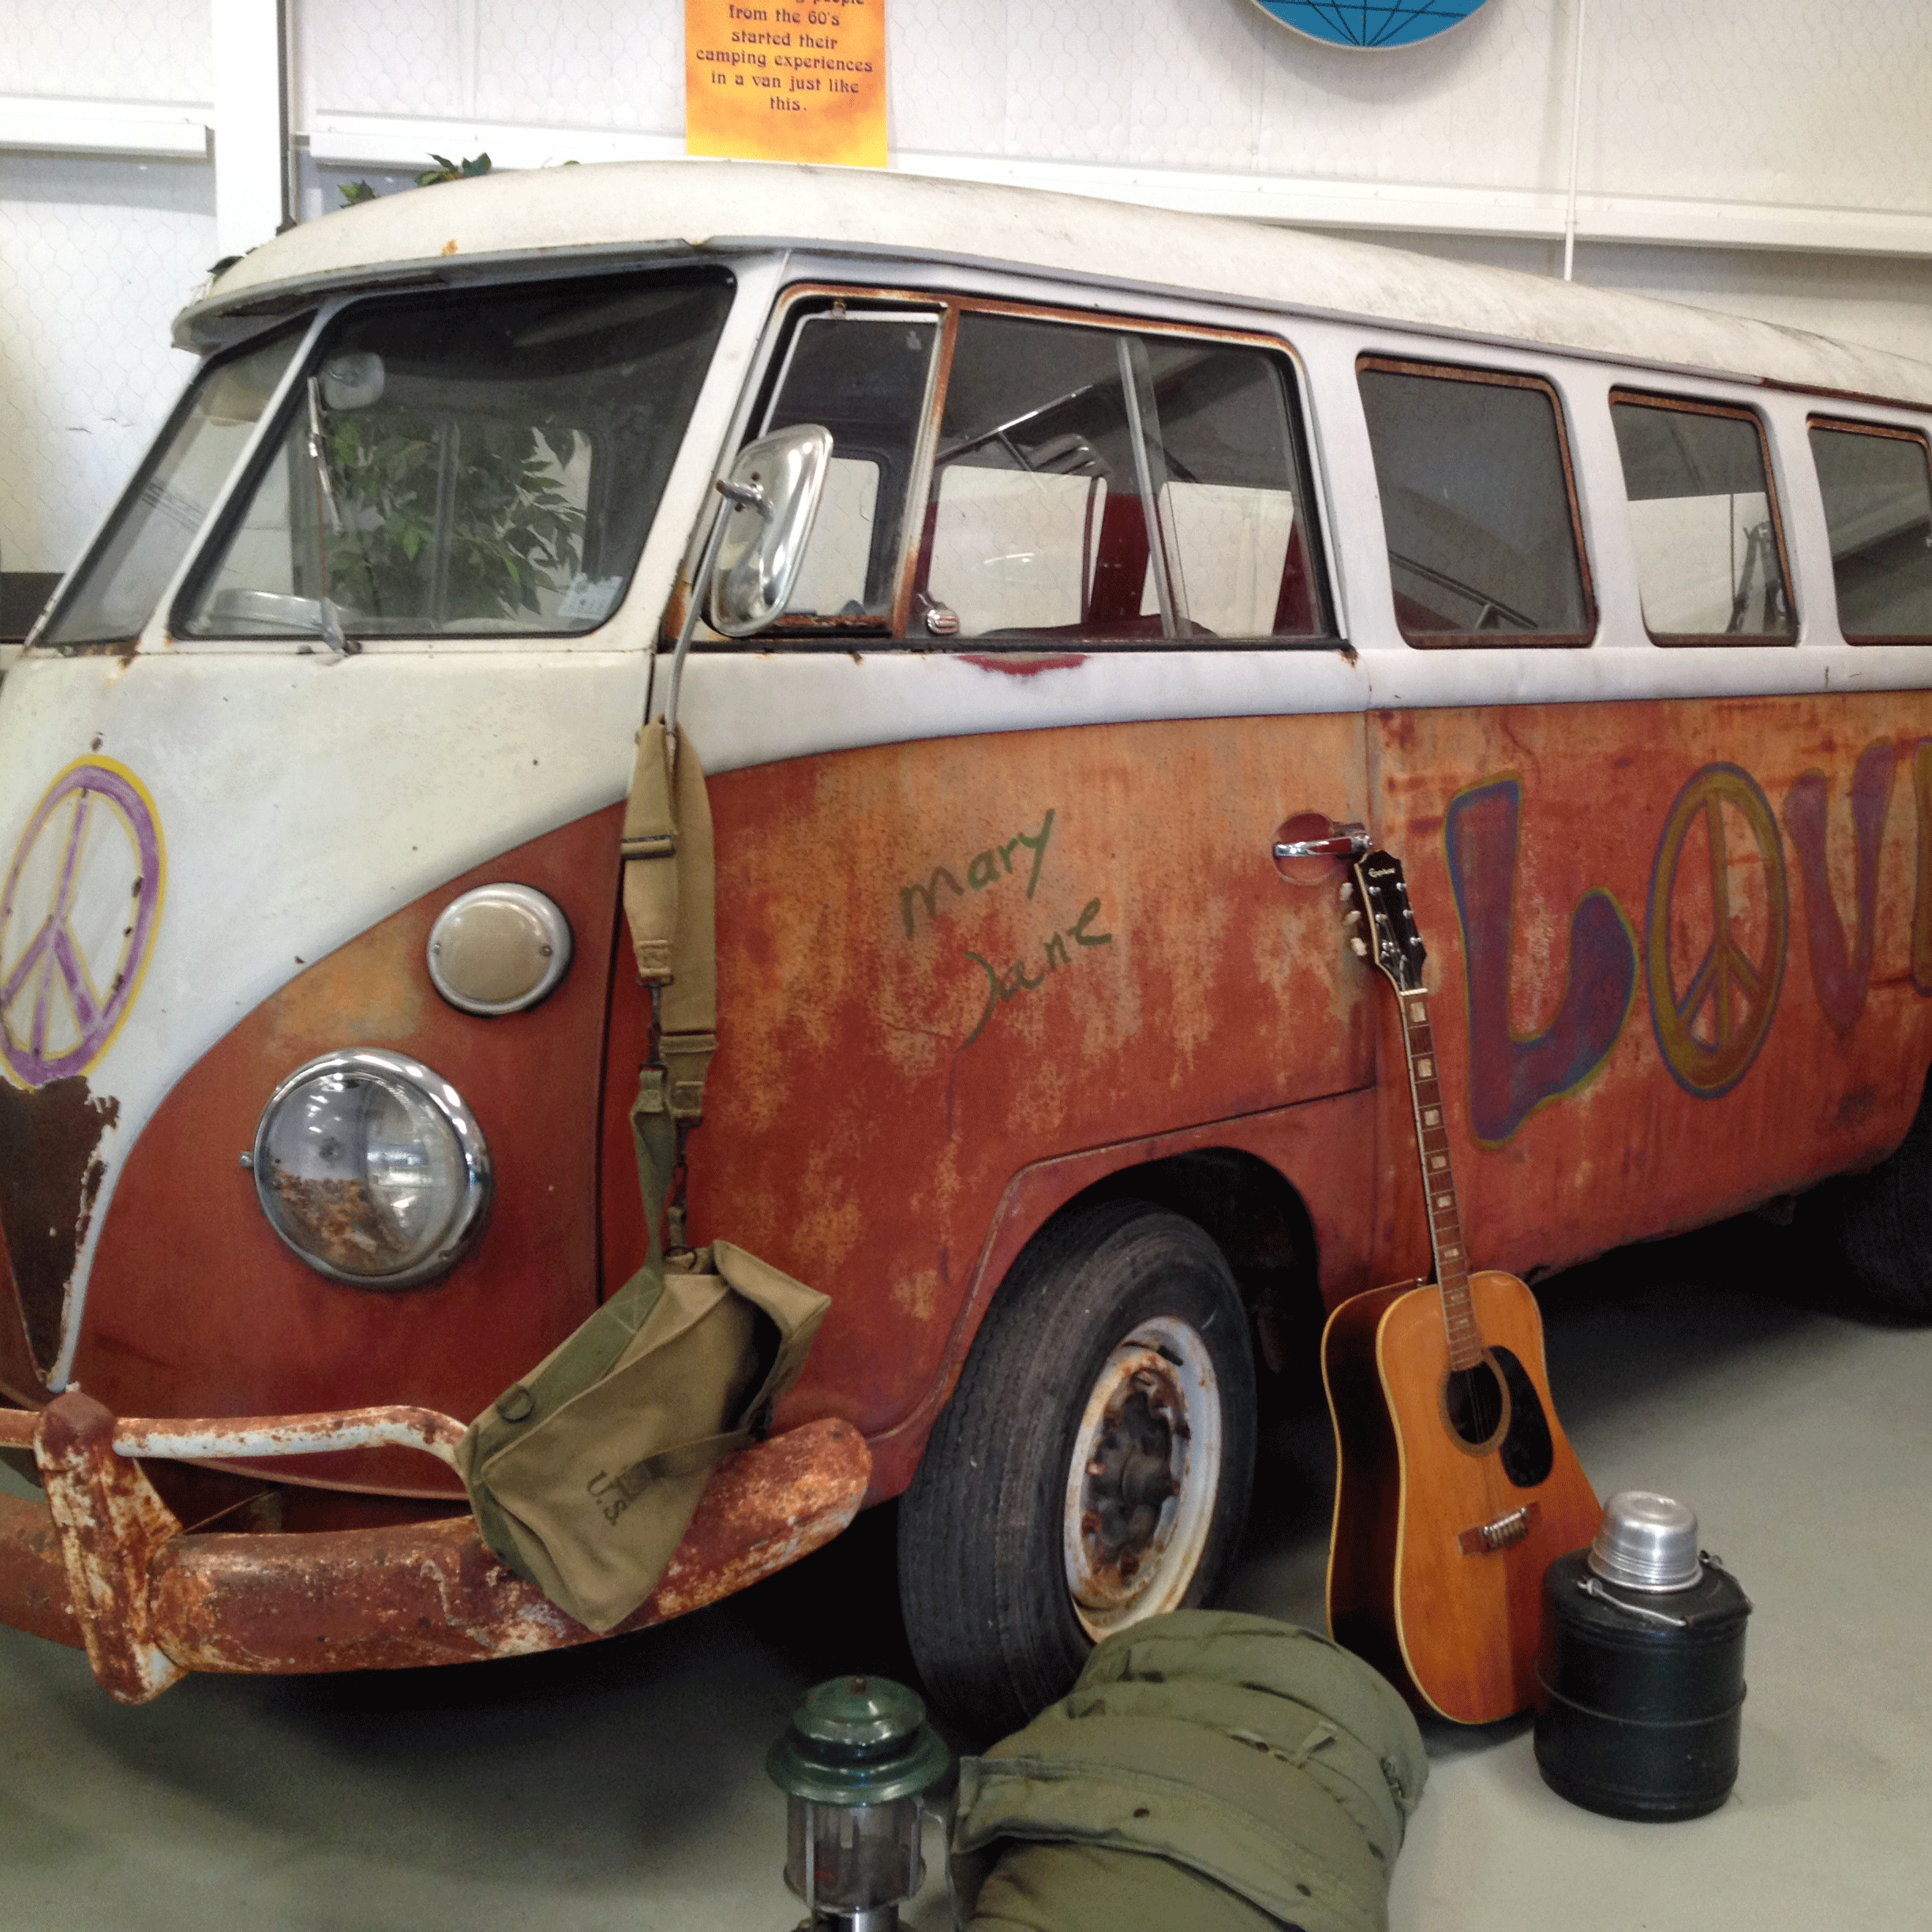 1967 VW Van screams love and peace — and camping joy